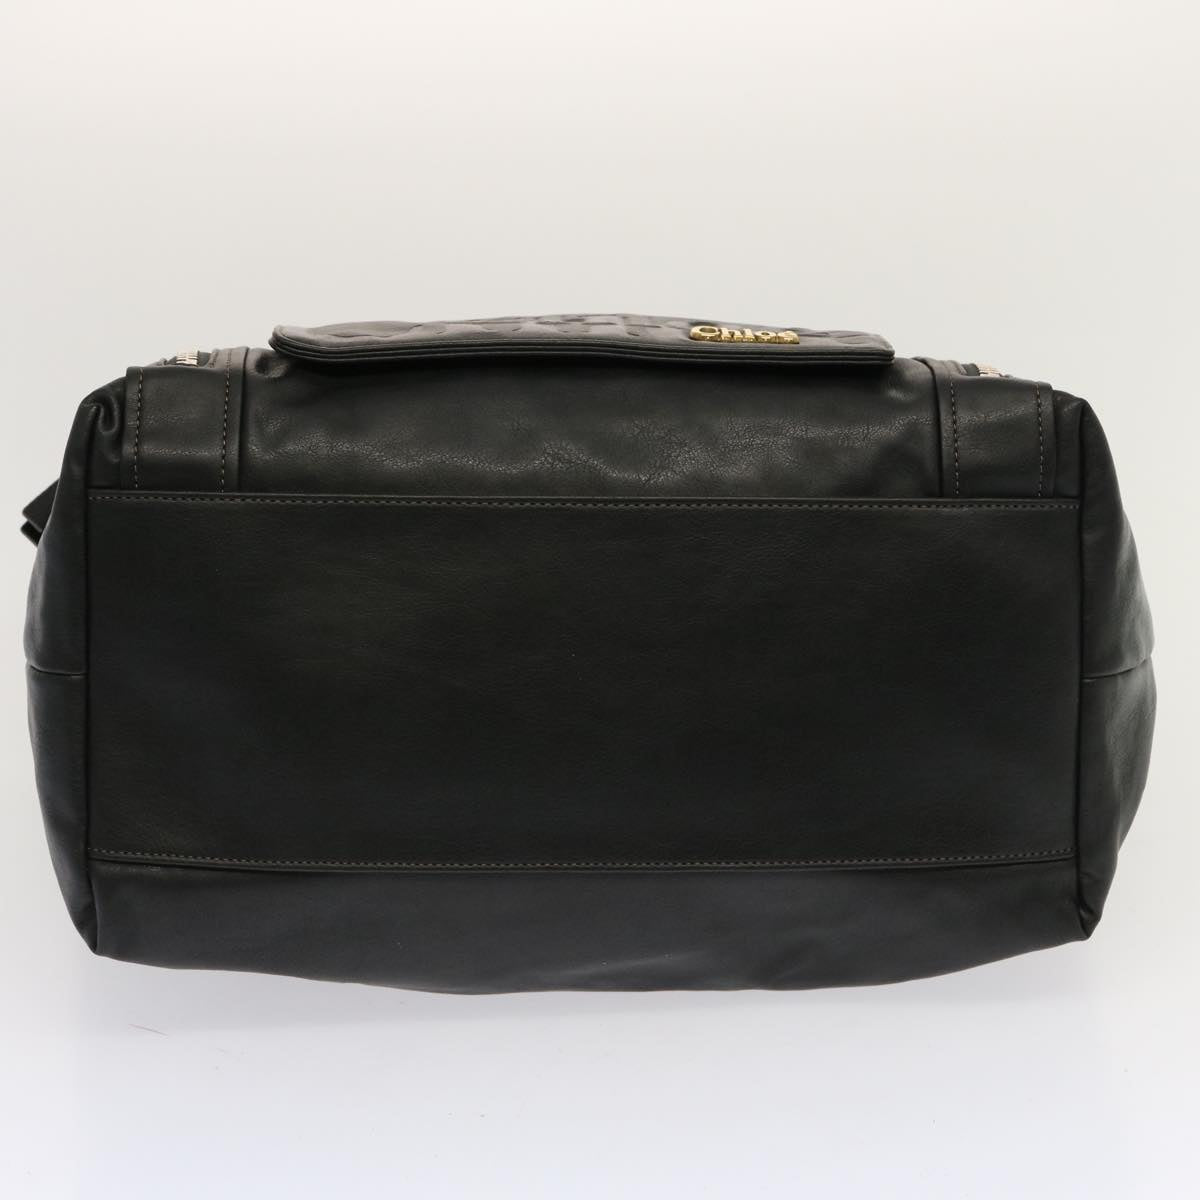 Chloe Hand Bag Leather Black Auth yk11424